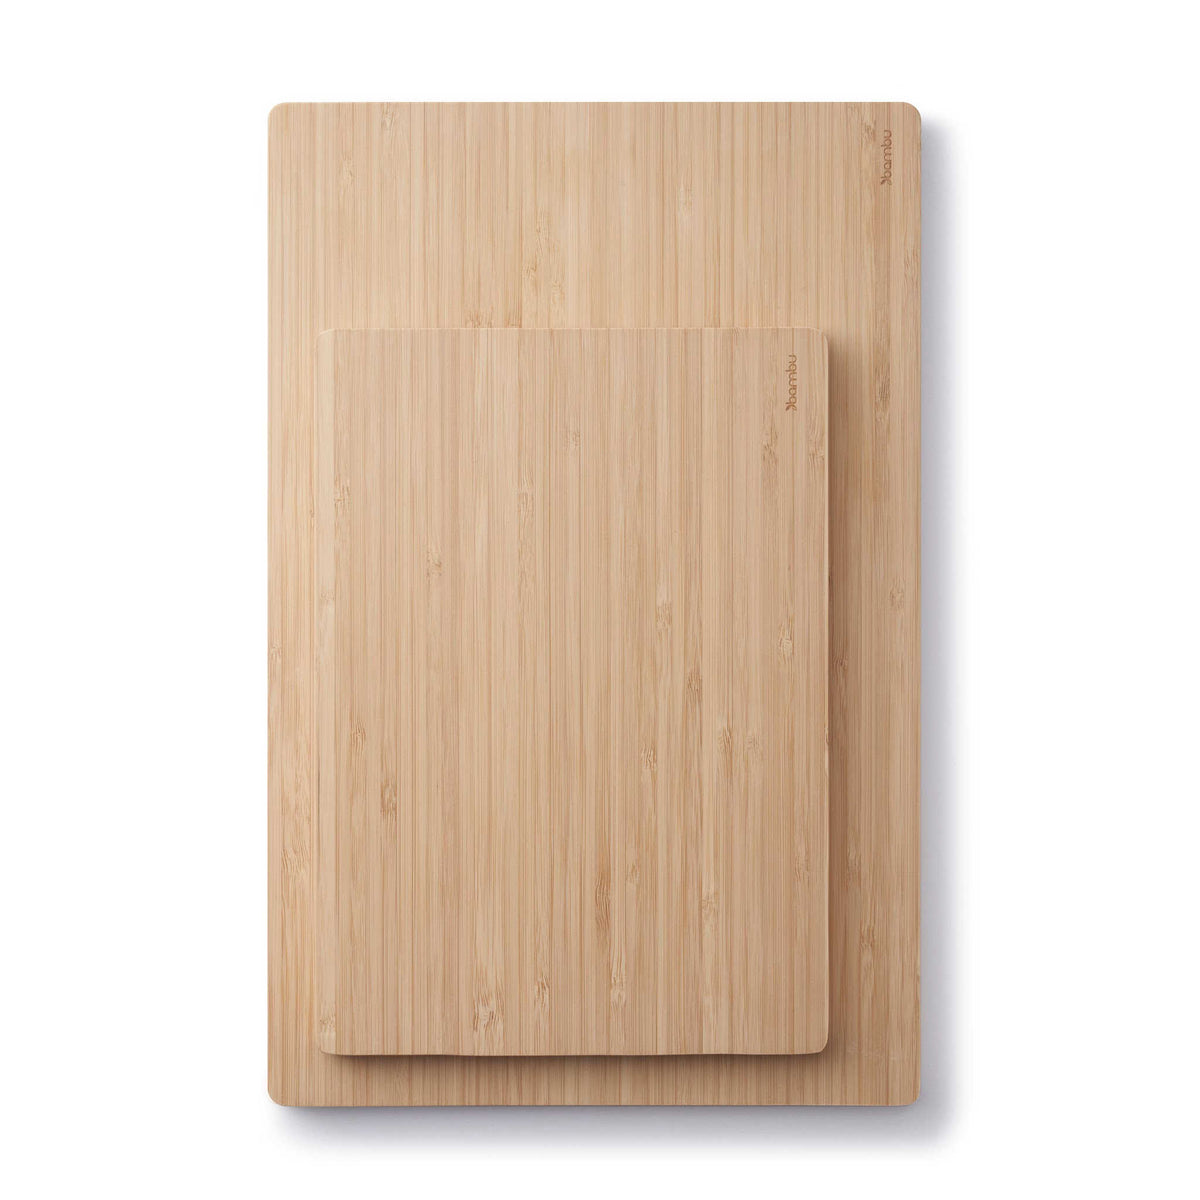 Bambu Undercut Cutting & Serving Board. Medium. 10 x 7